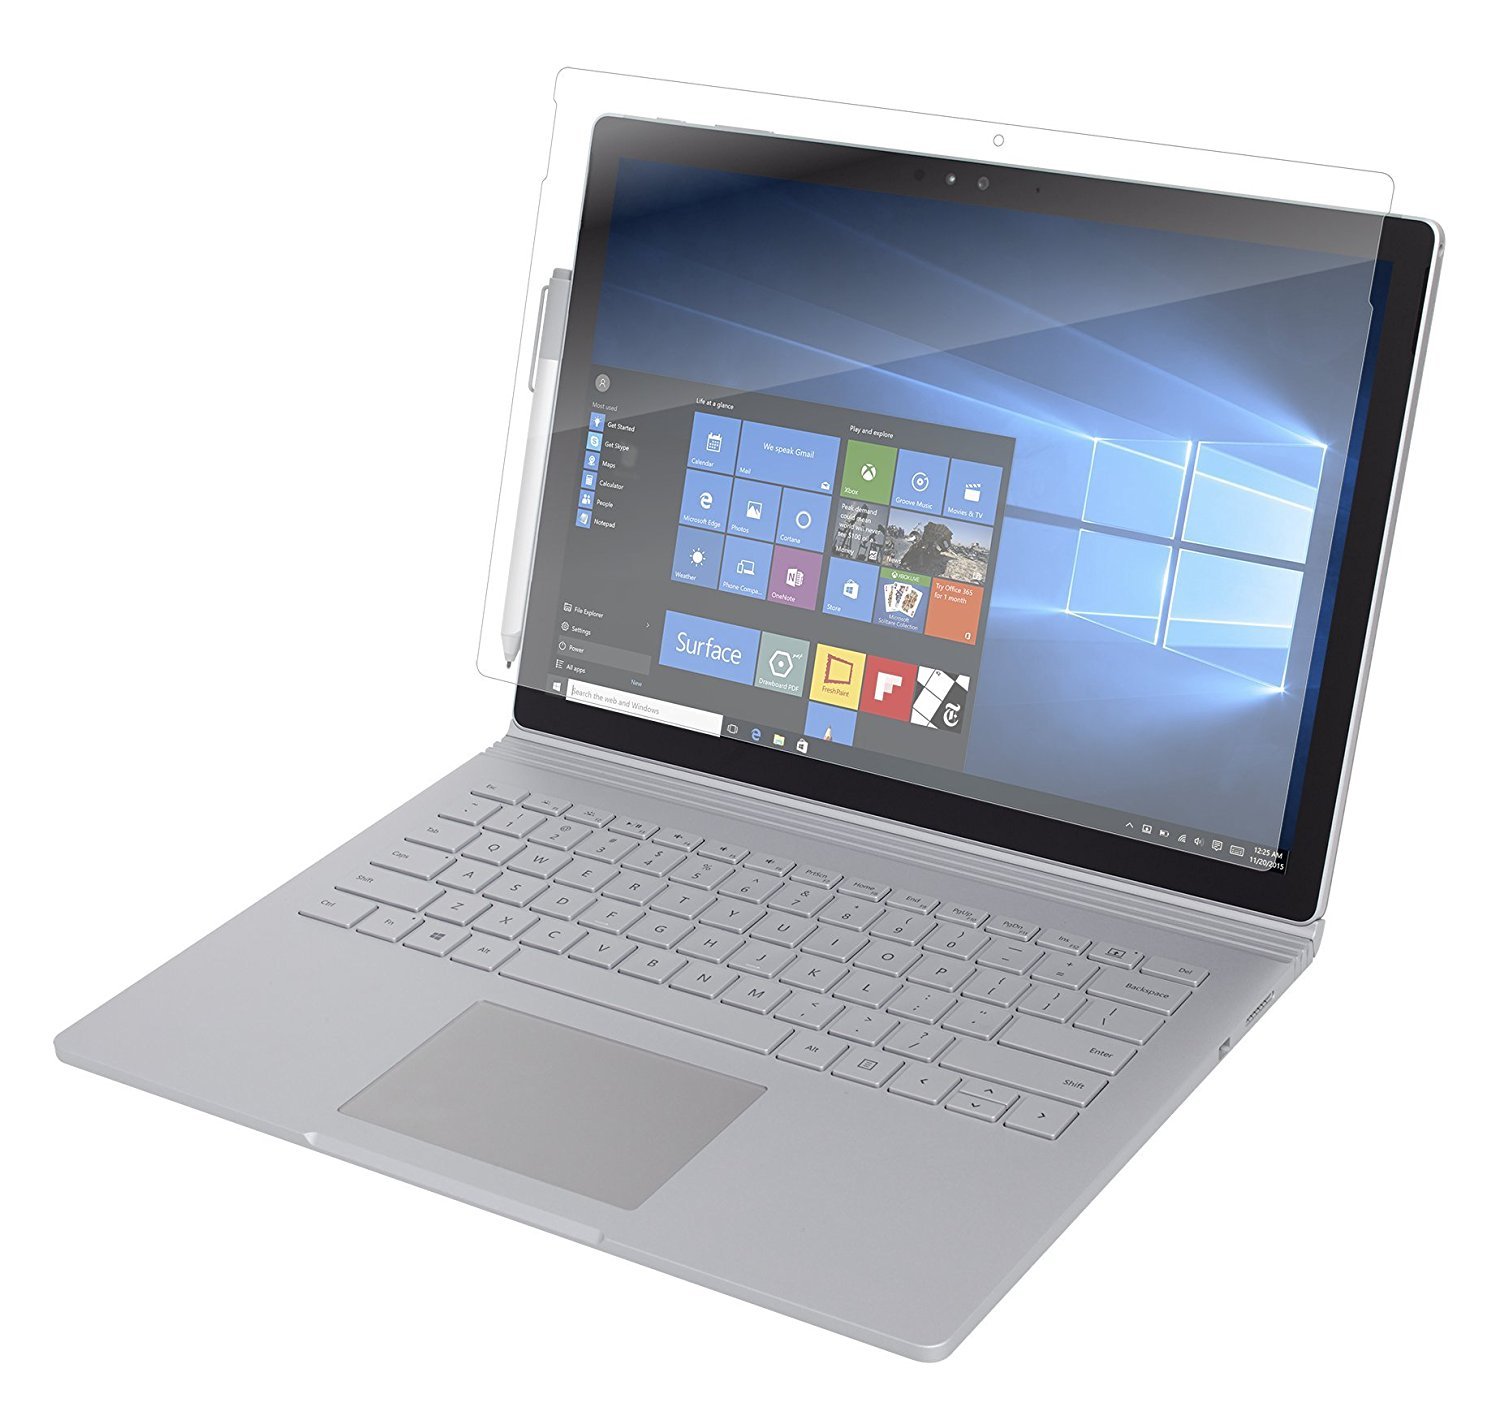 Microsoft Surface Book 2 HD Tempered Gl... New 15 inch Screen Protector Megoo 